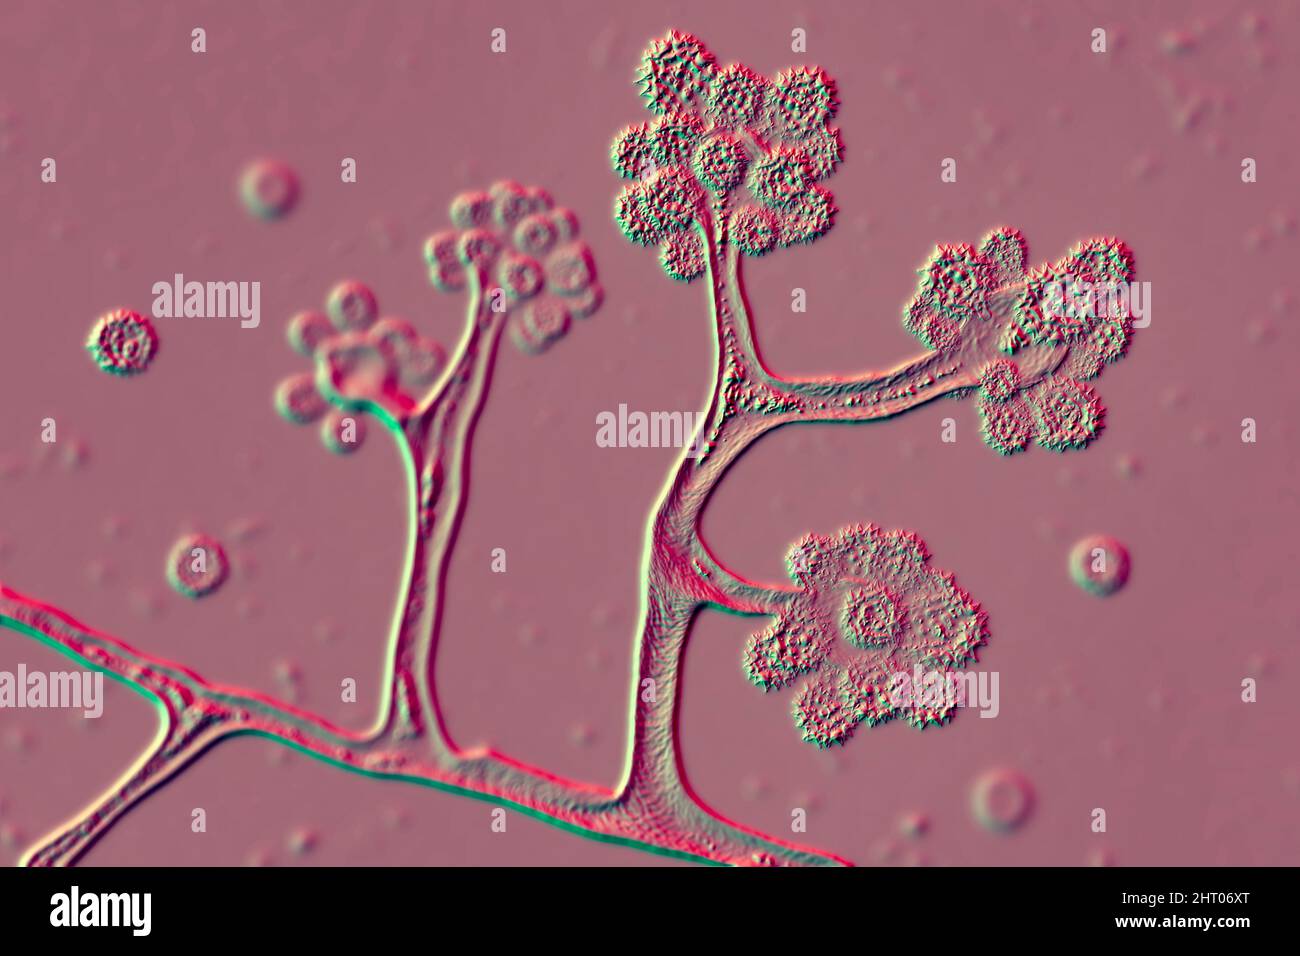 Cunninghamella fungi, illustration Stock Photo